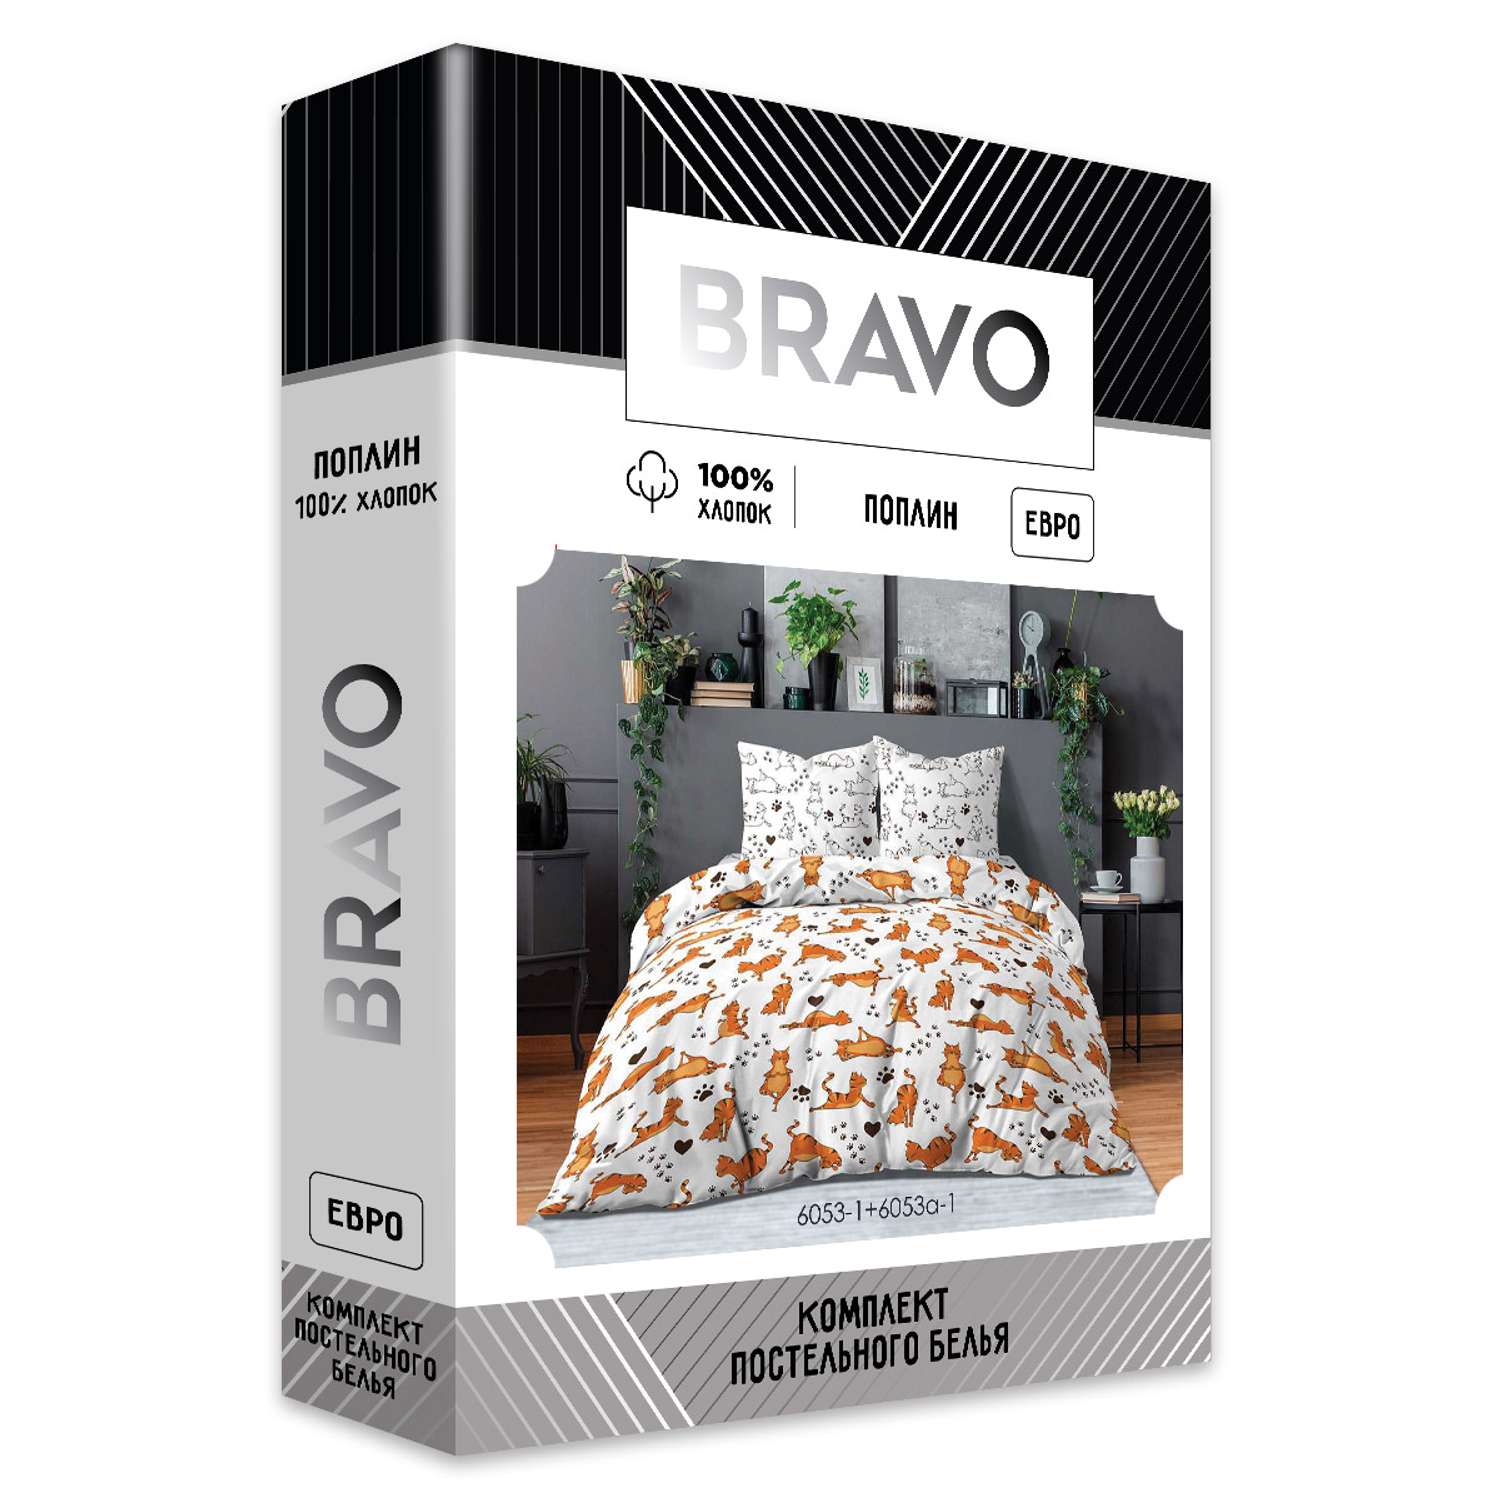 Комплект постельного белья Bravo Котойога евро наволочки 70х70 см - фото 10